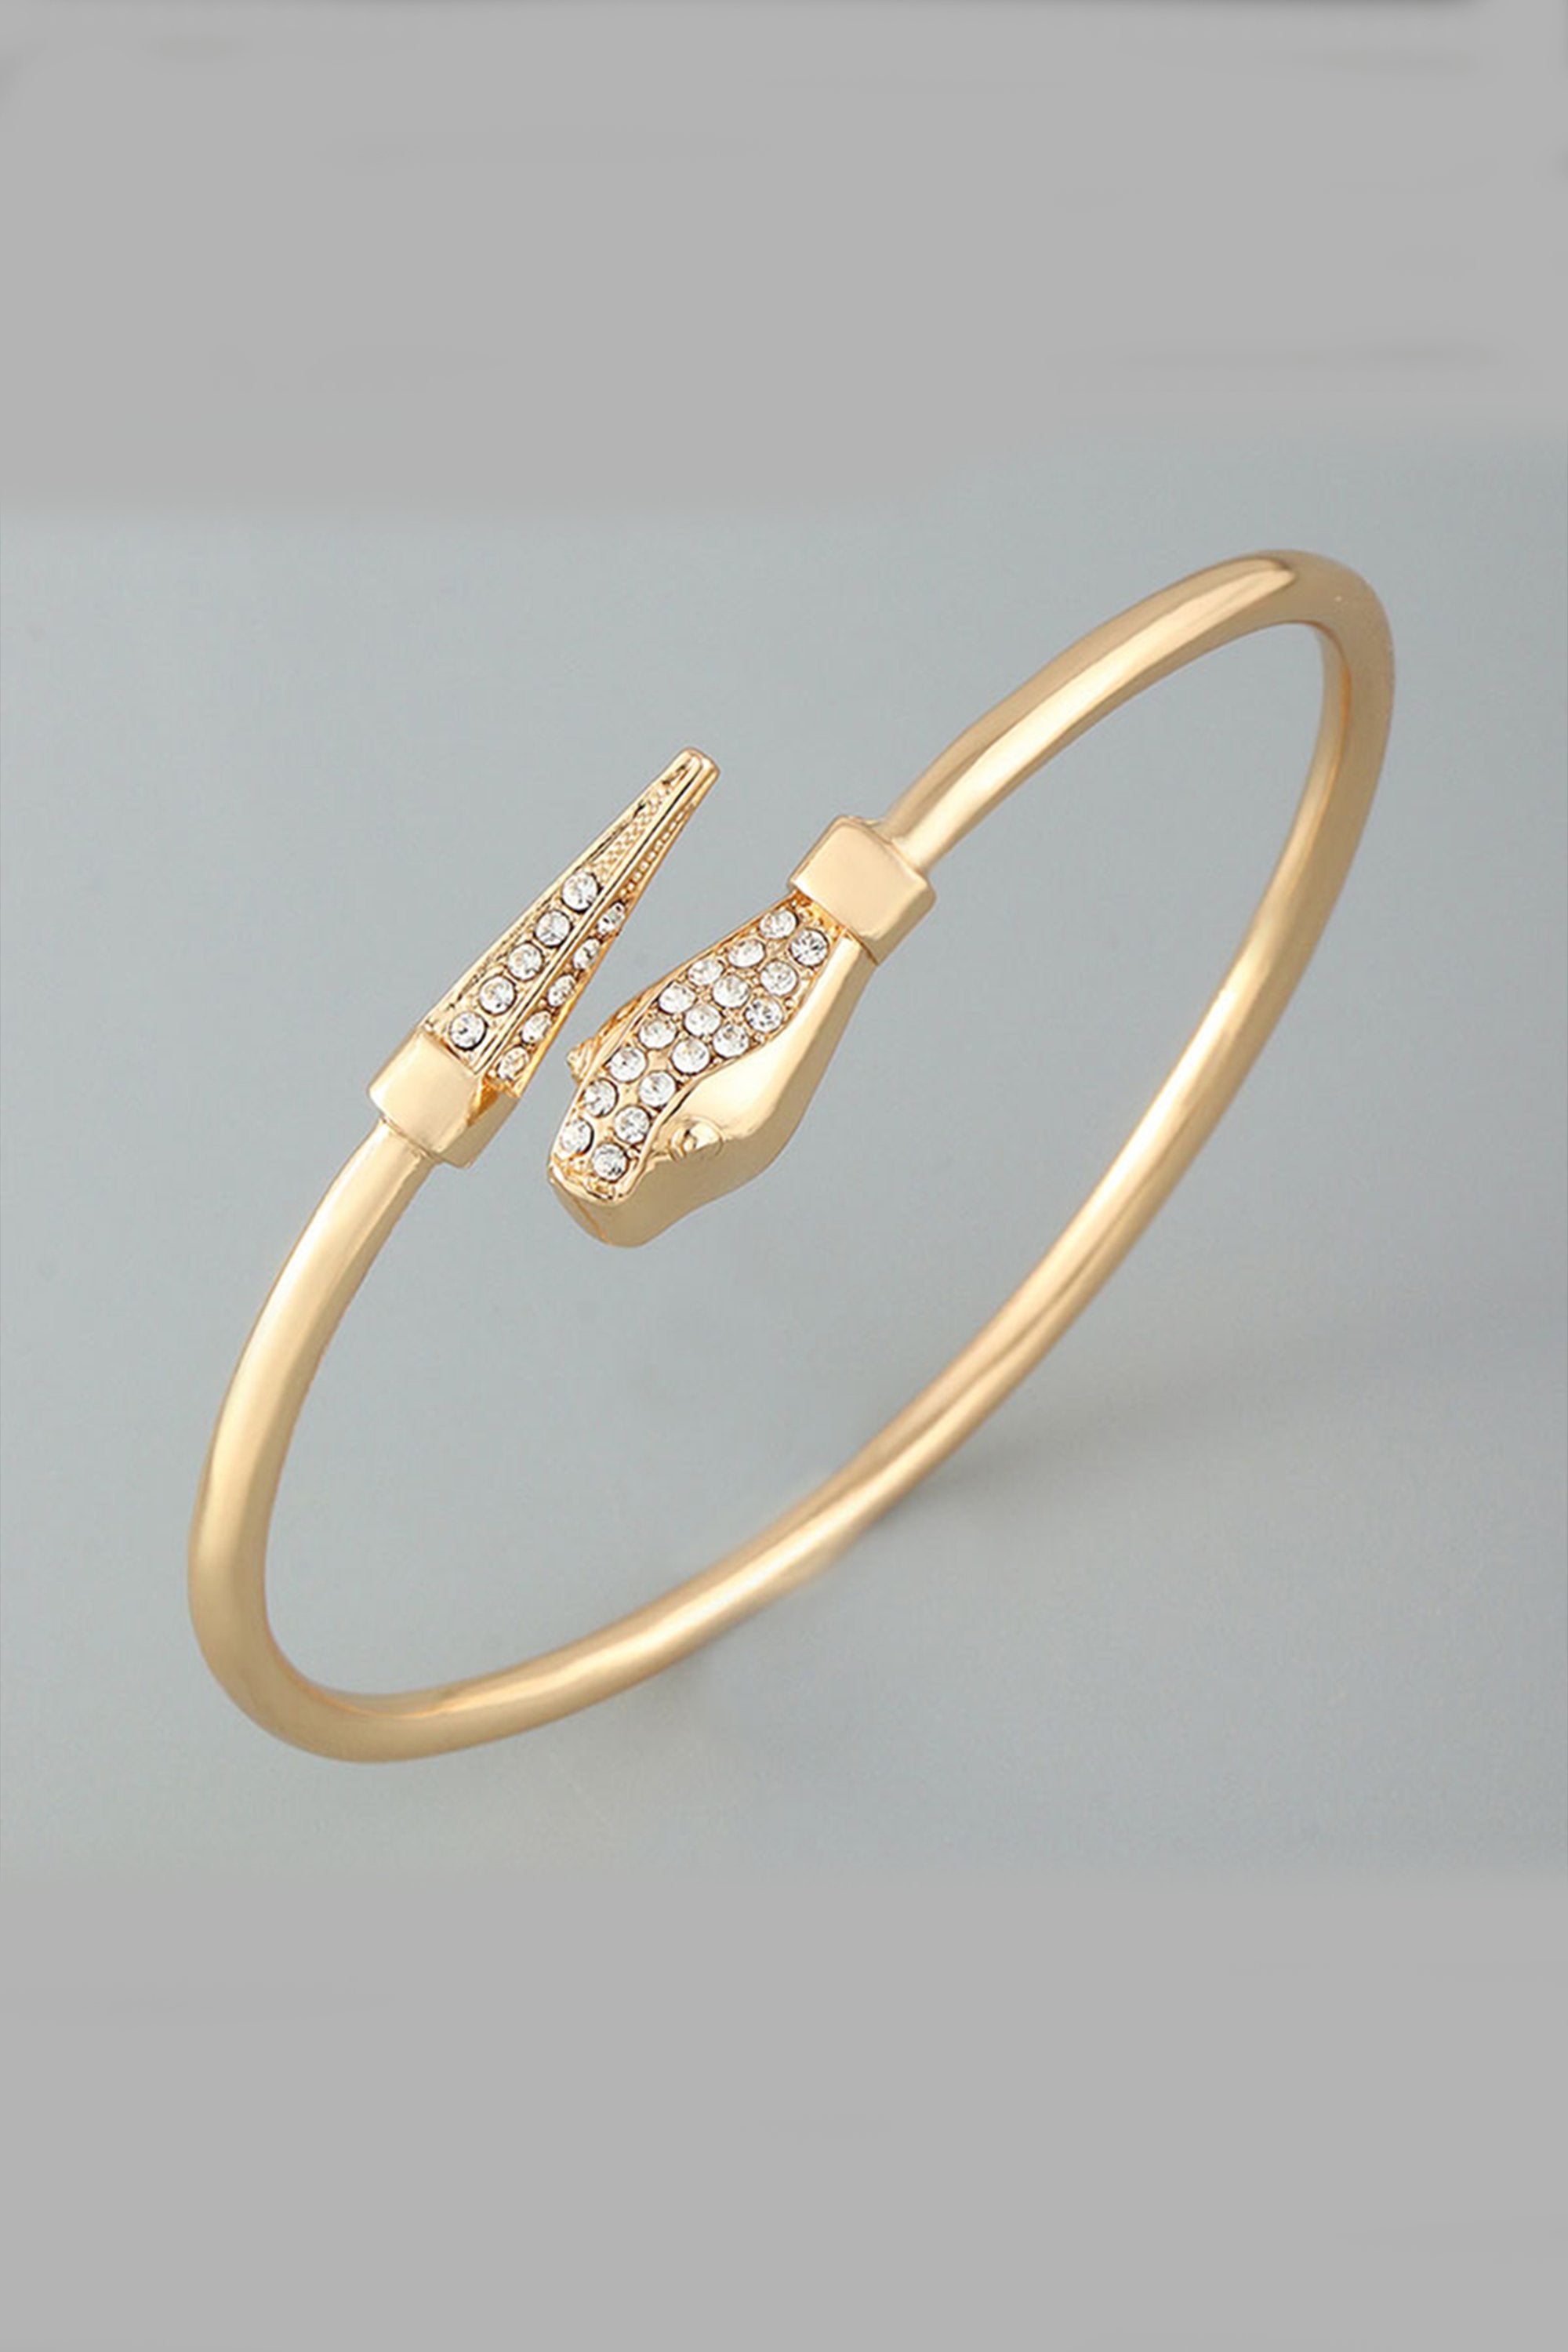 Flower chain bracelet  Hand jewelry, Fancy jewellery, Beautiful jewelry